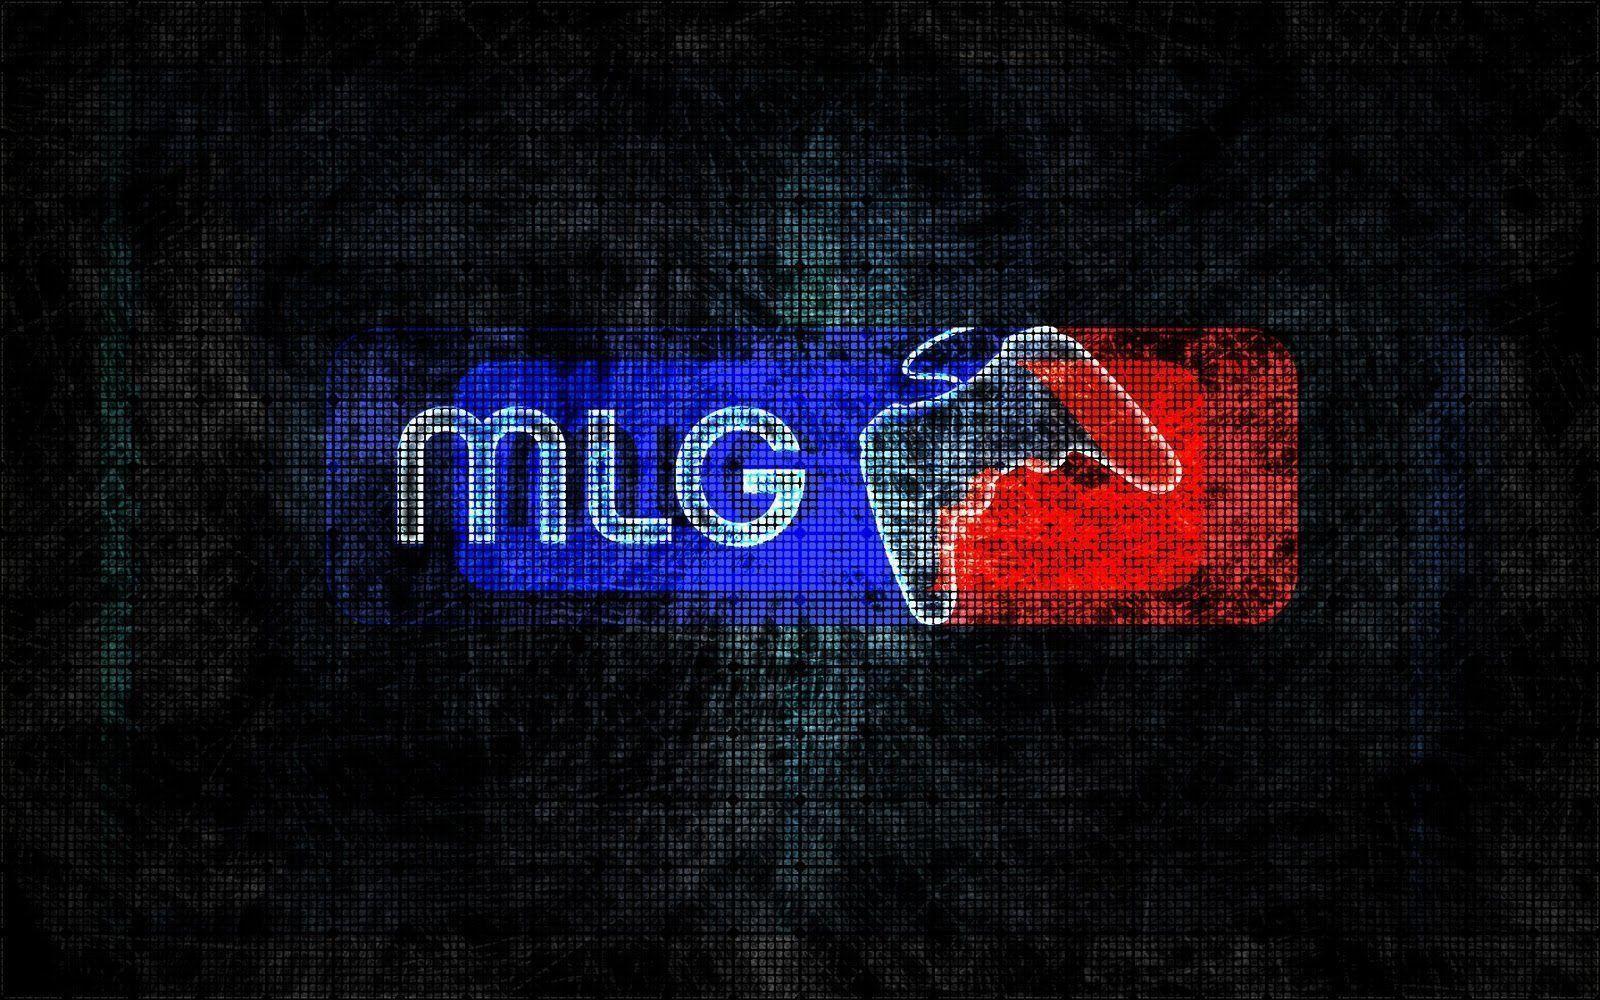 MLG Logo - Image And Wallpaper free to download